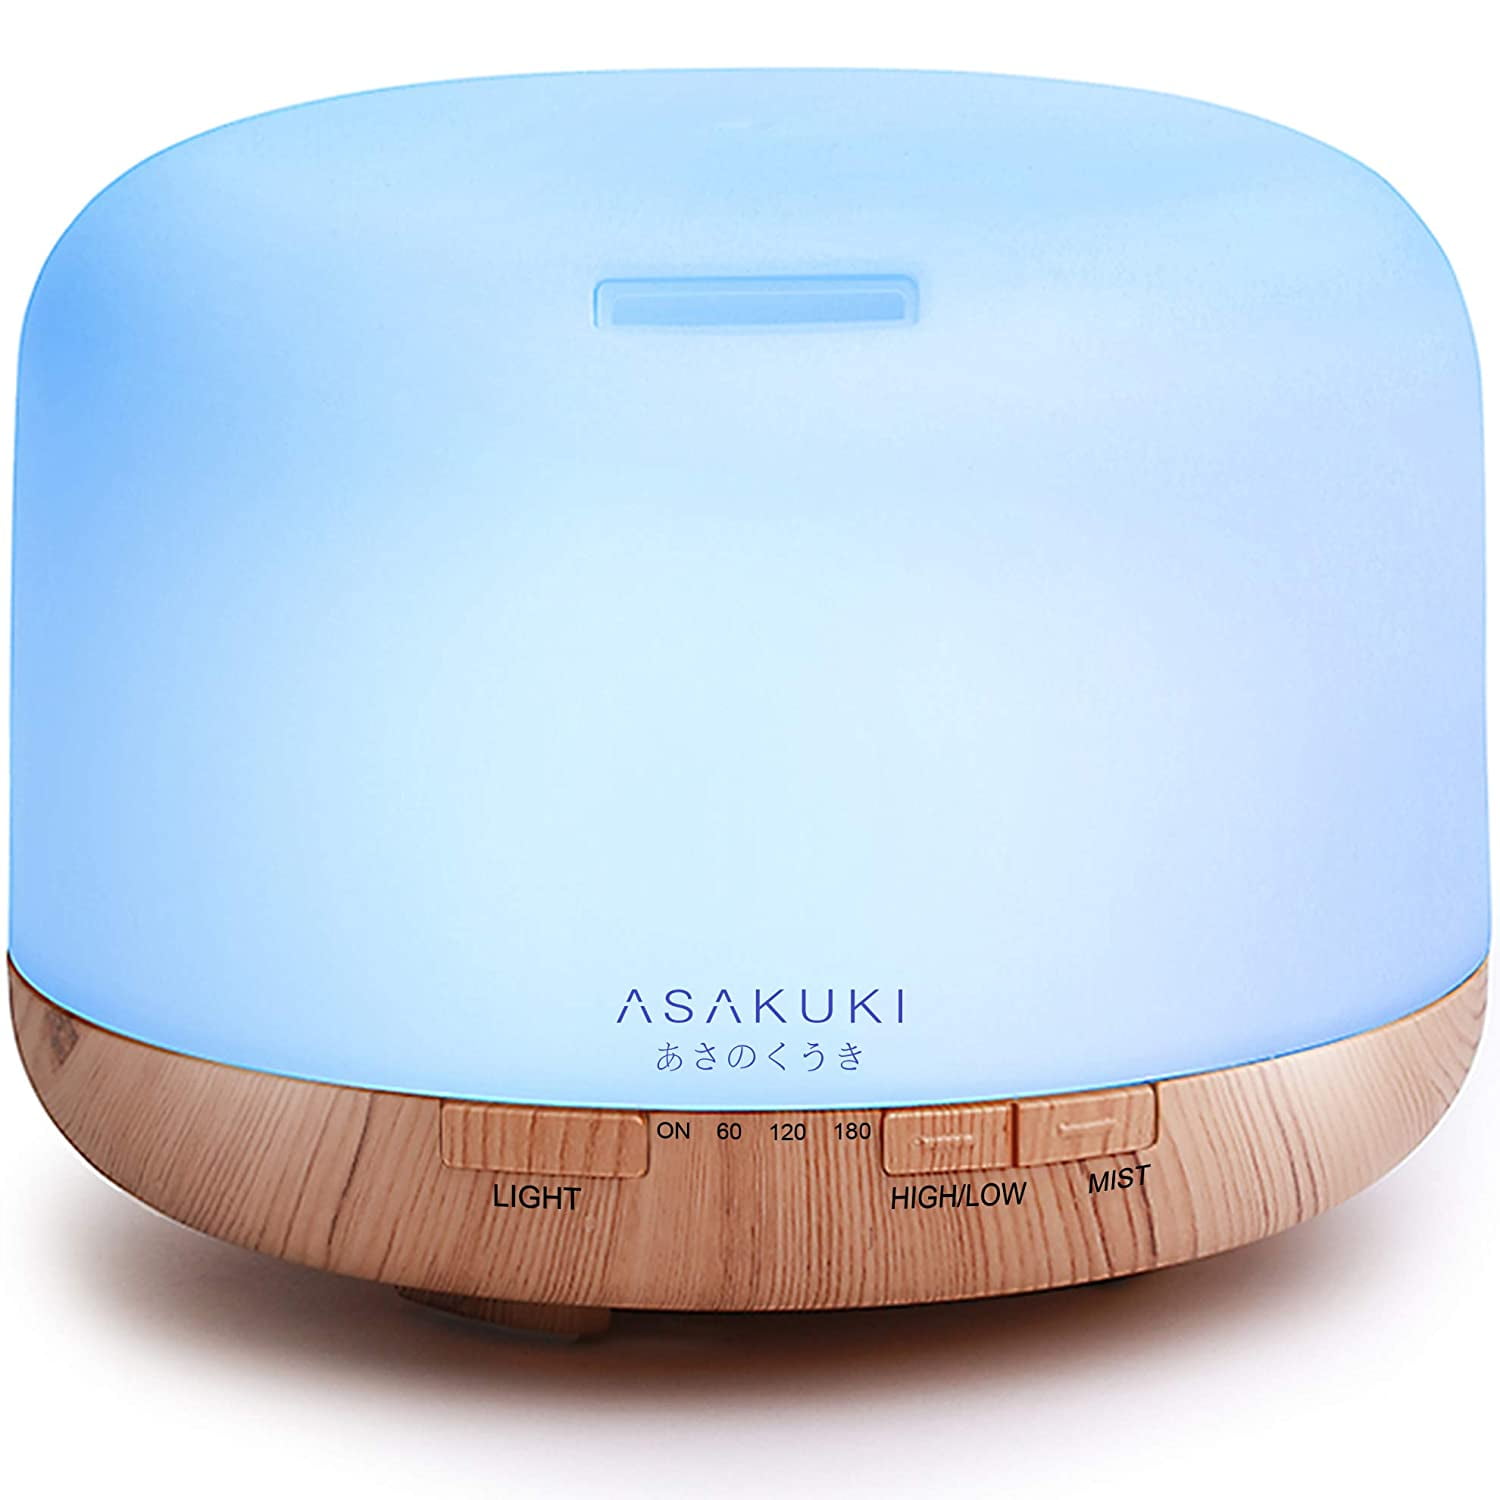 ASAKUKI 500ml Premium, Essential Oil Diffuser, 5 in 1 Ultrasonic